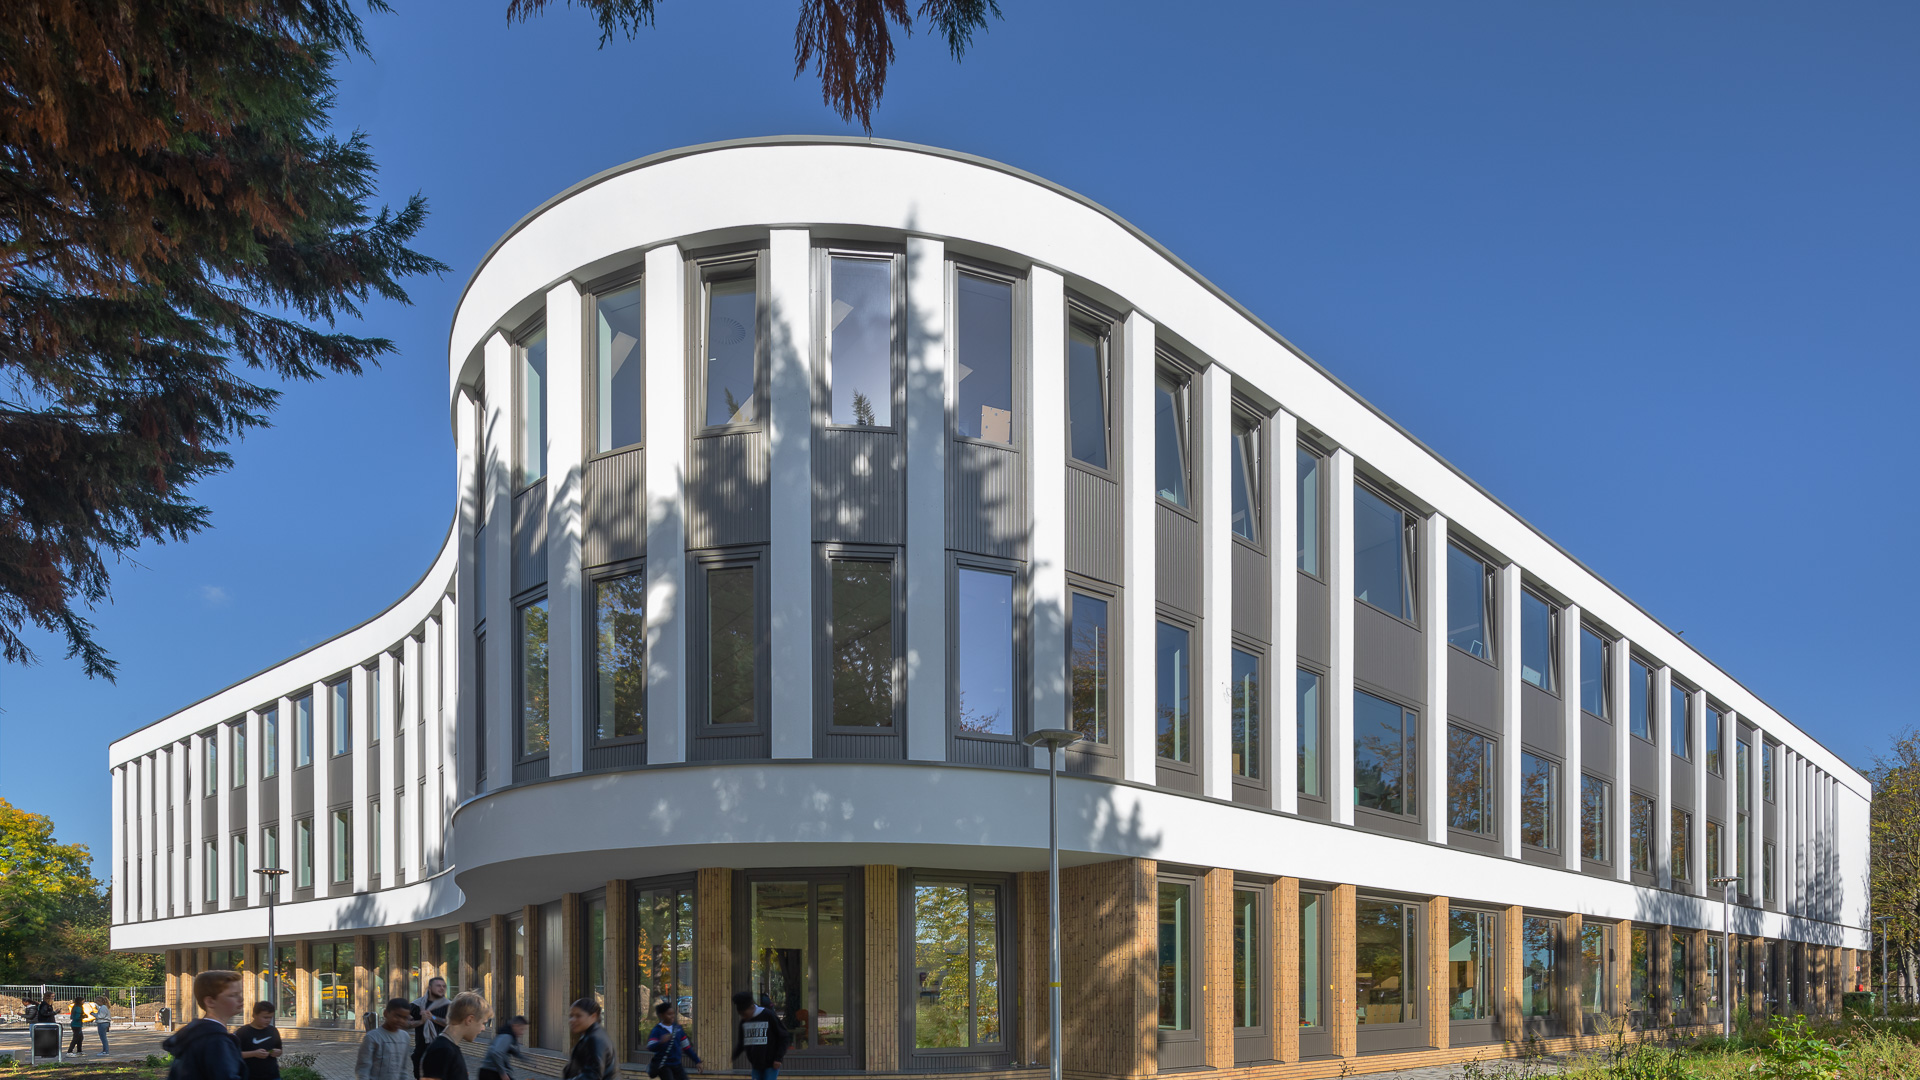 © 2022, Gemini College, Ridderkerk, DP6 architecten